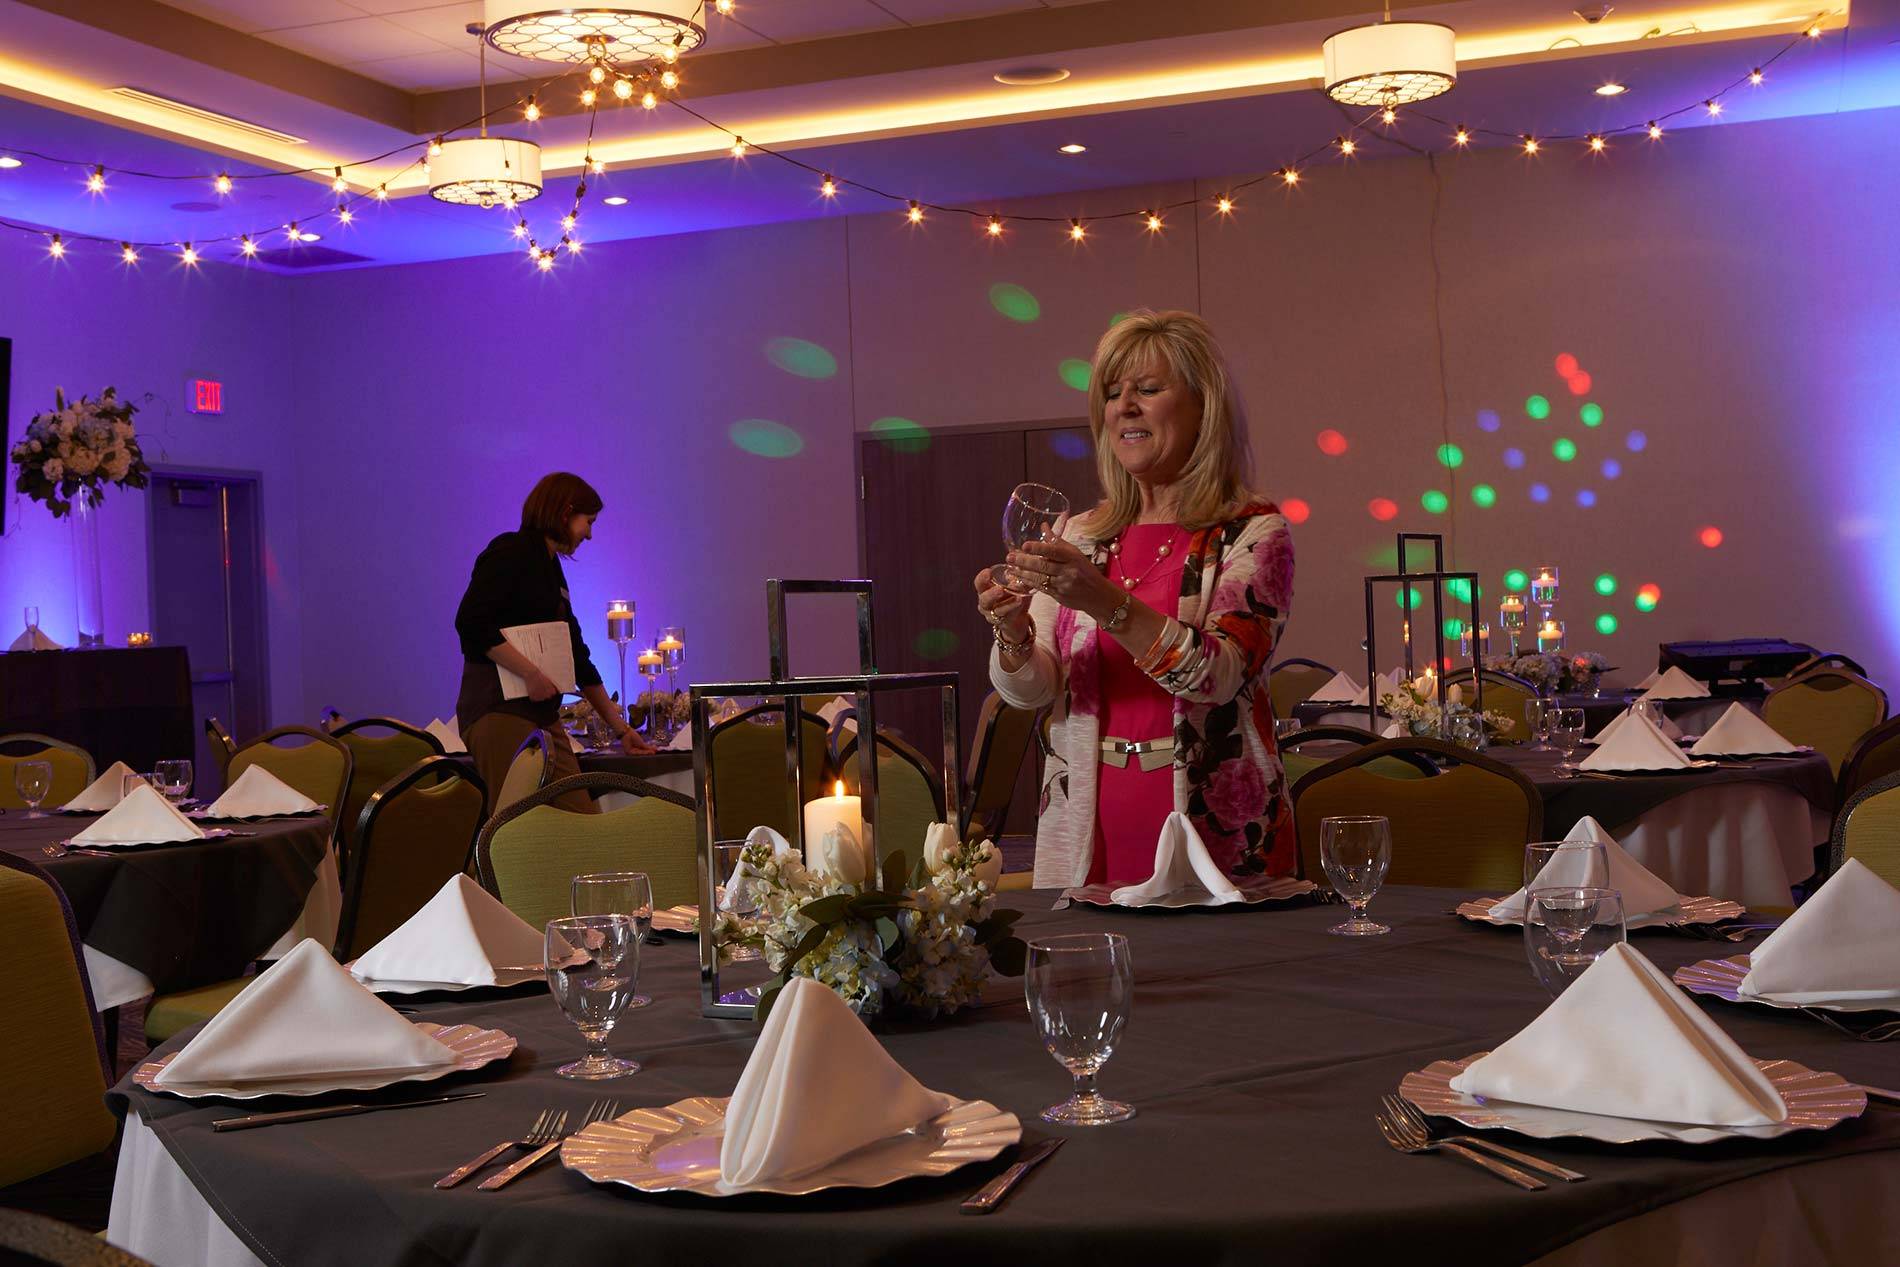 Suburbann Inns Banquets and Events, Hilton Garden, Grand Rapids, East Beltline